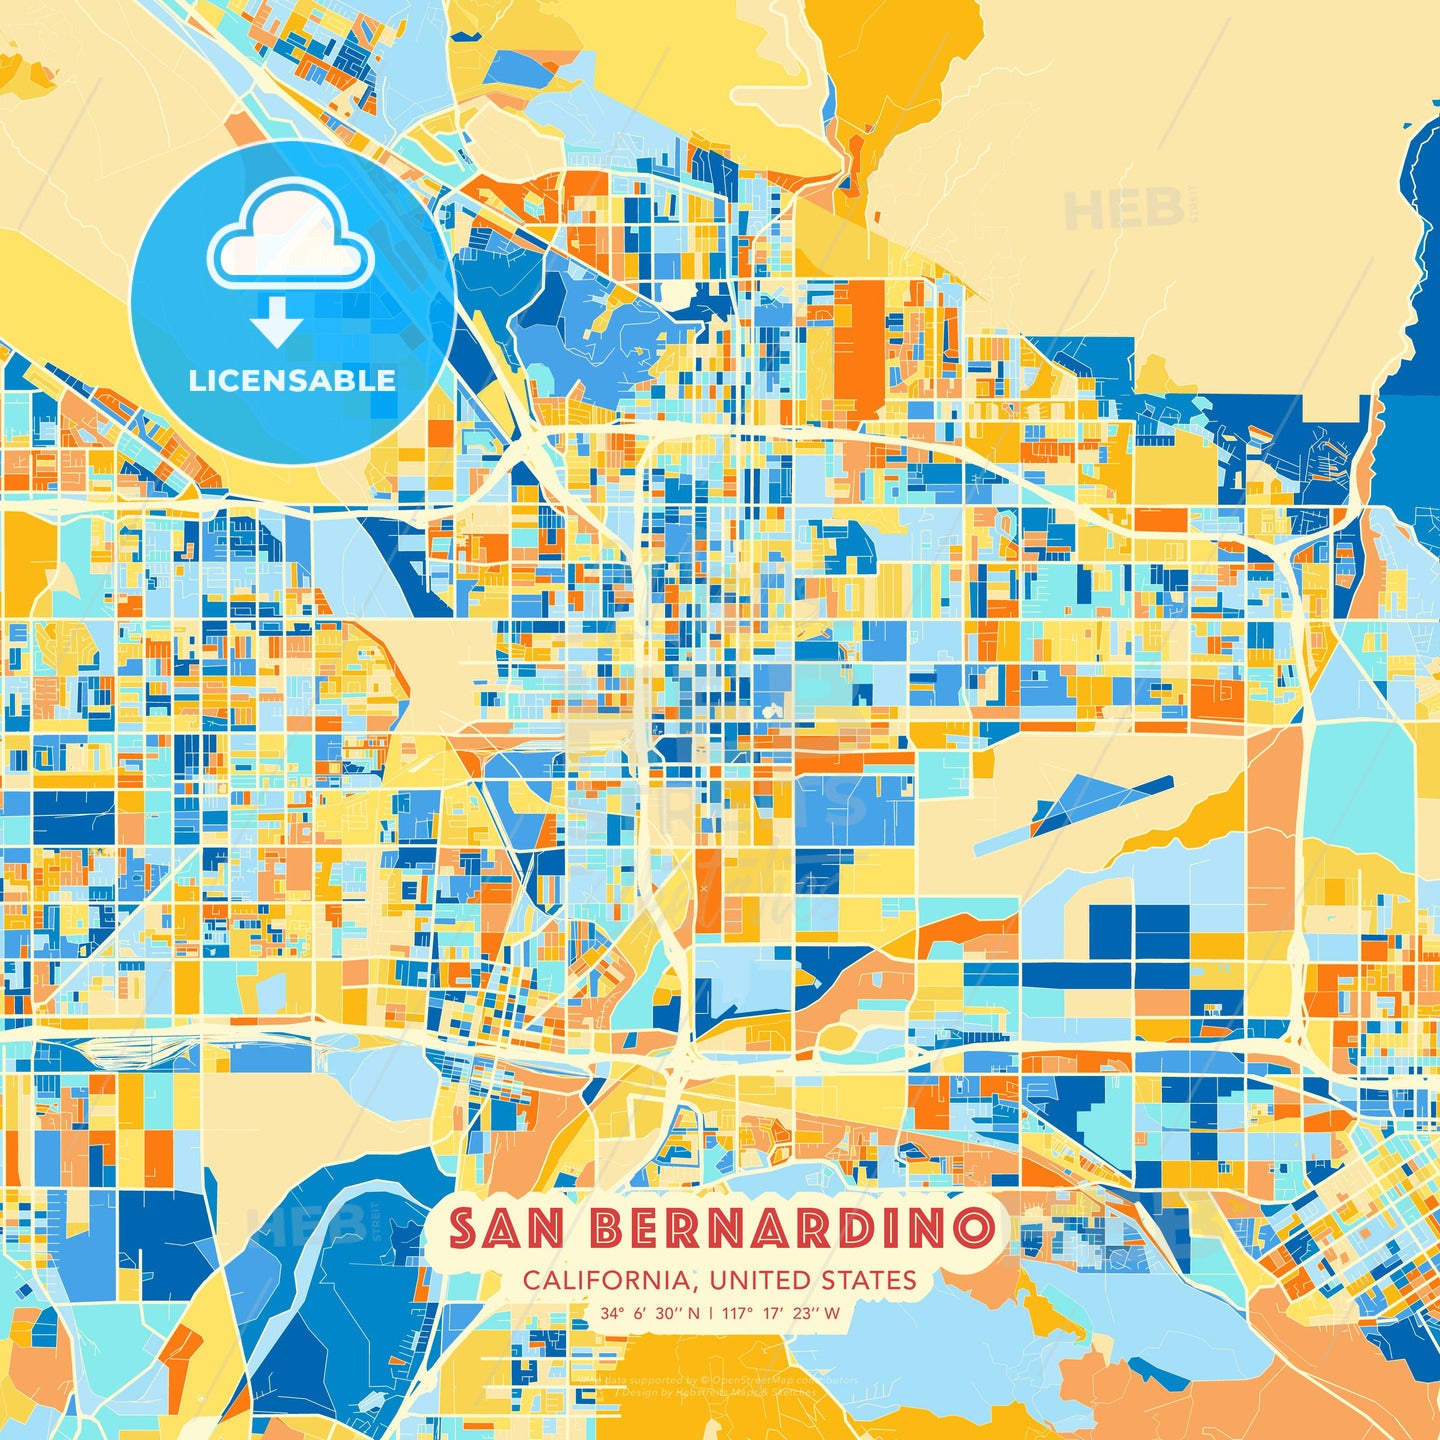 San Bernardino, California, United States, map - HEBSTREITS Sketches